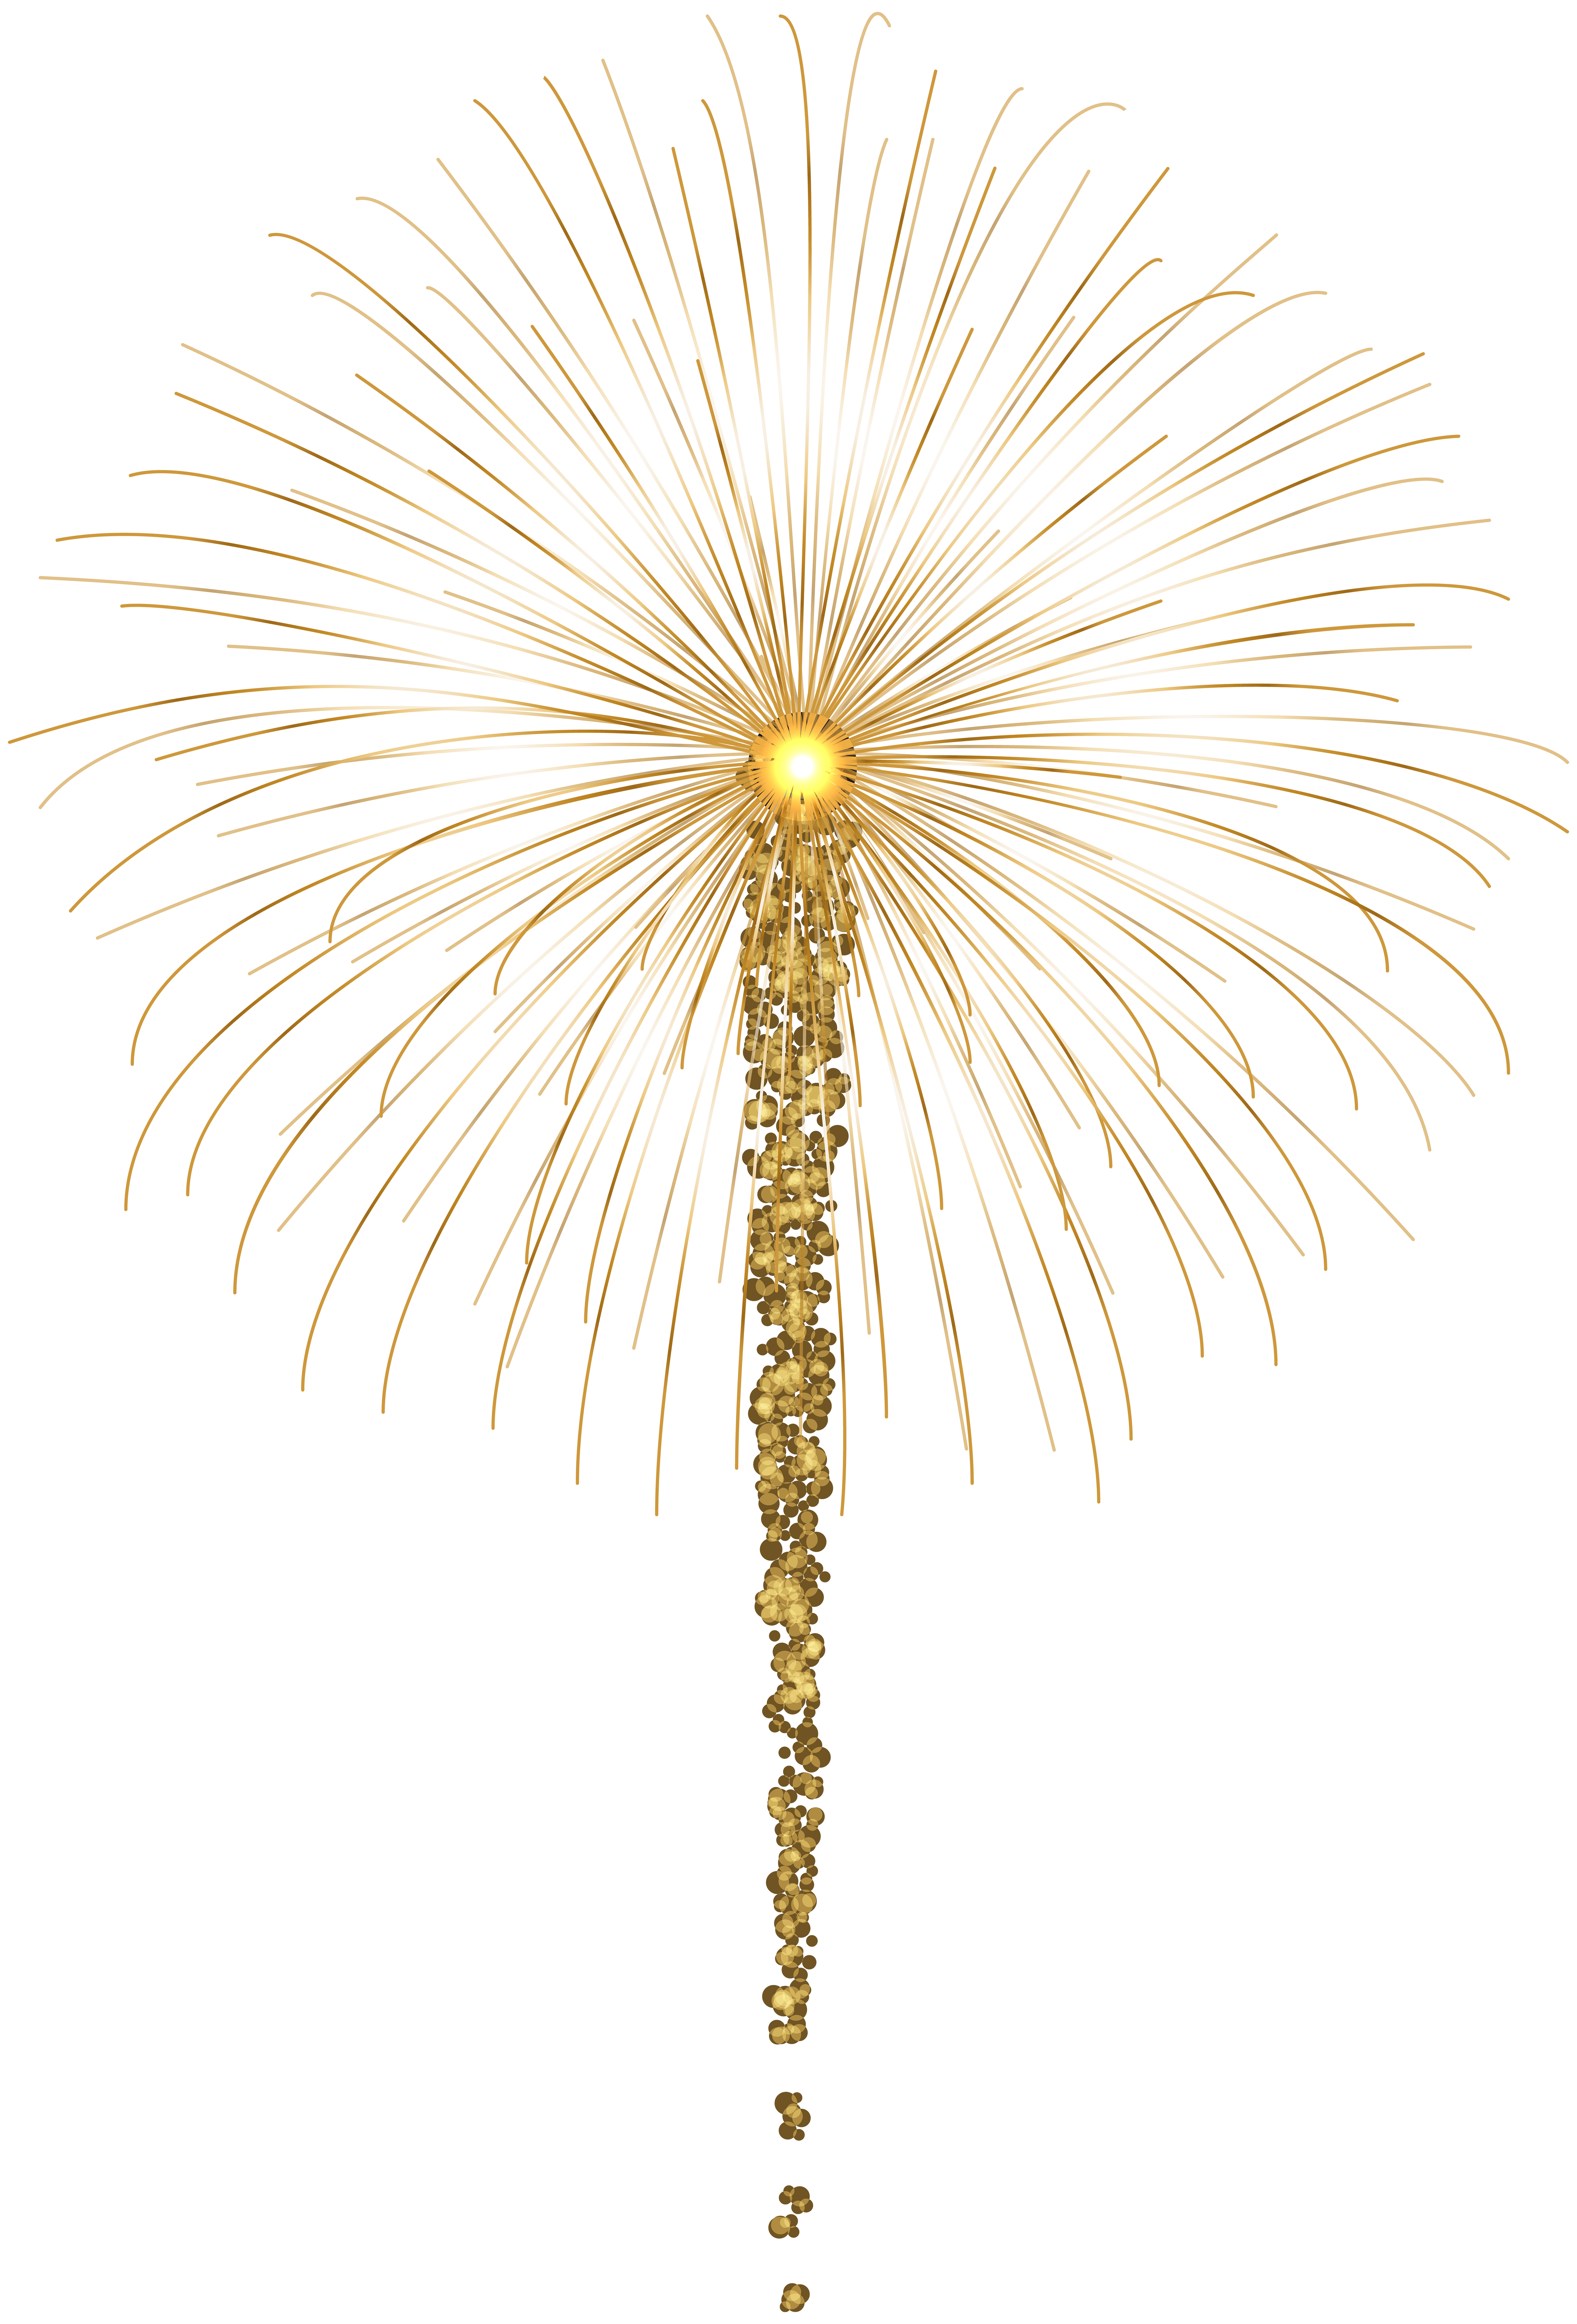 Gold fireworks for dark. Firecracker clipart vector